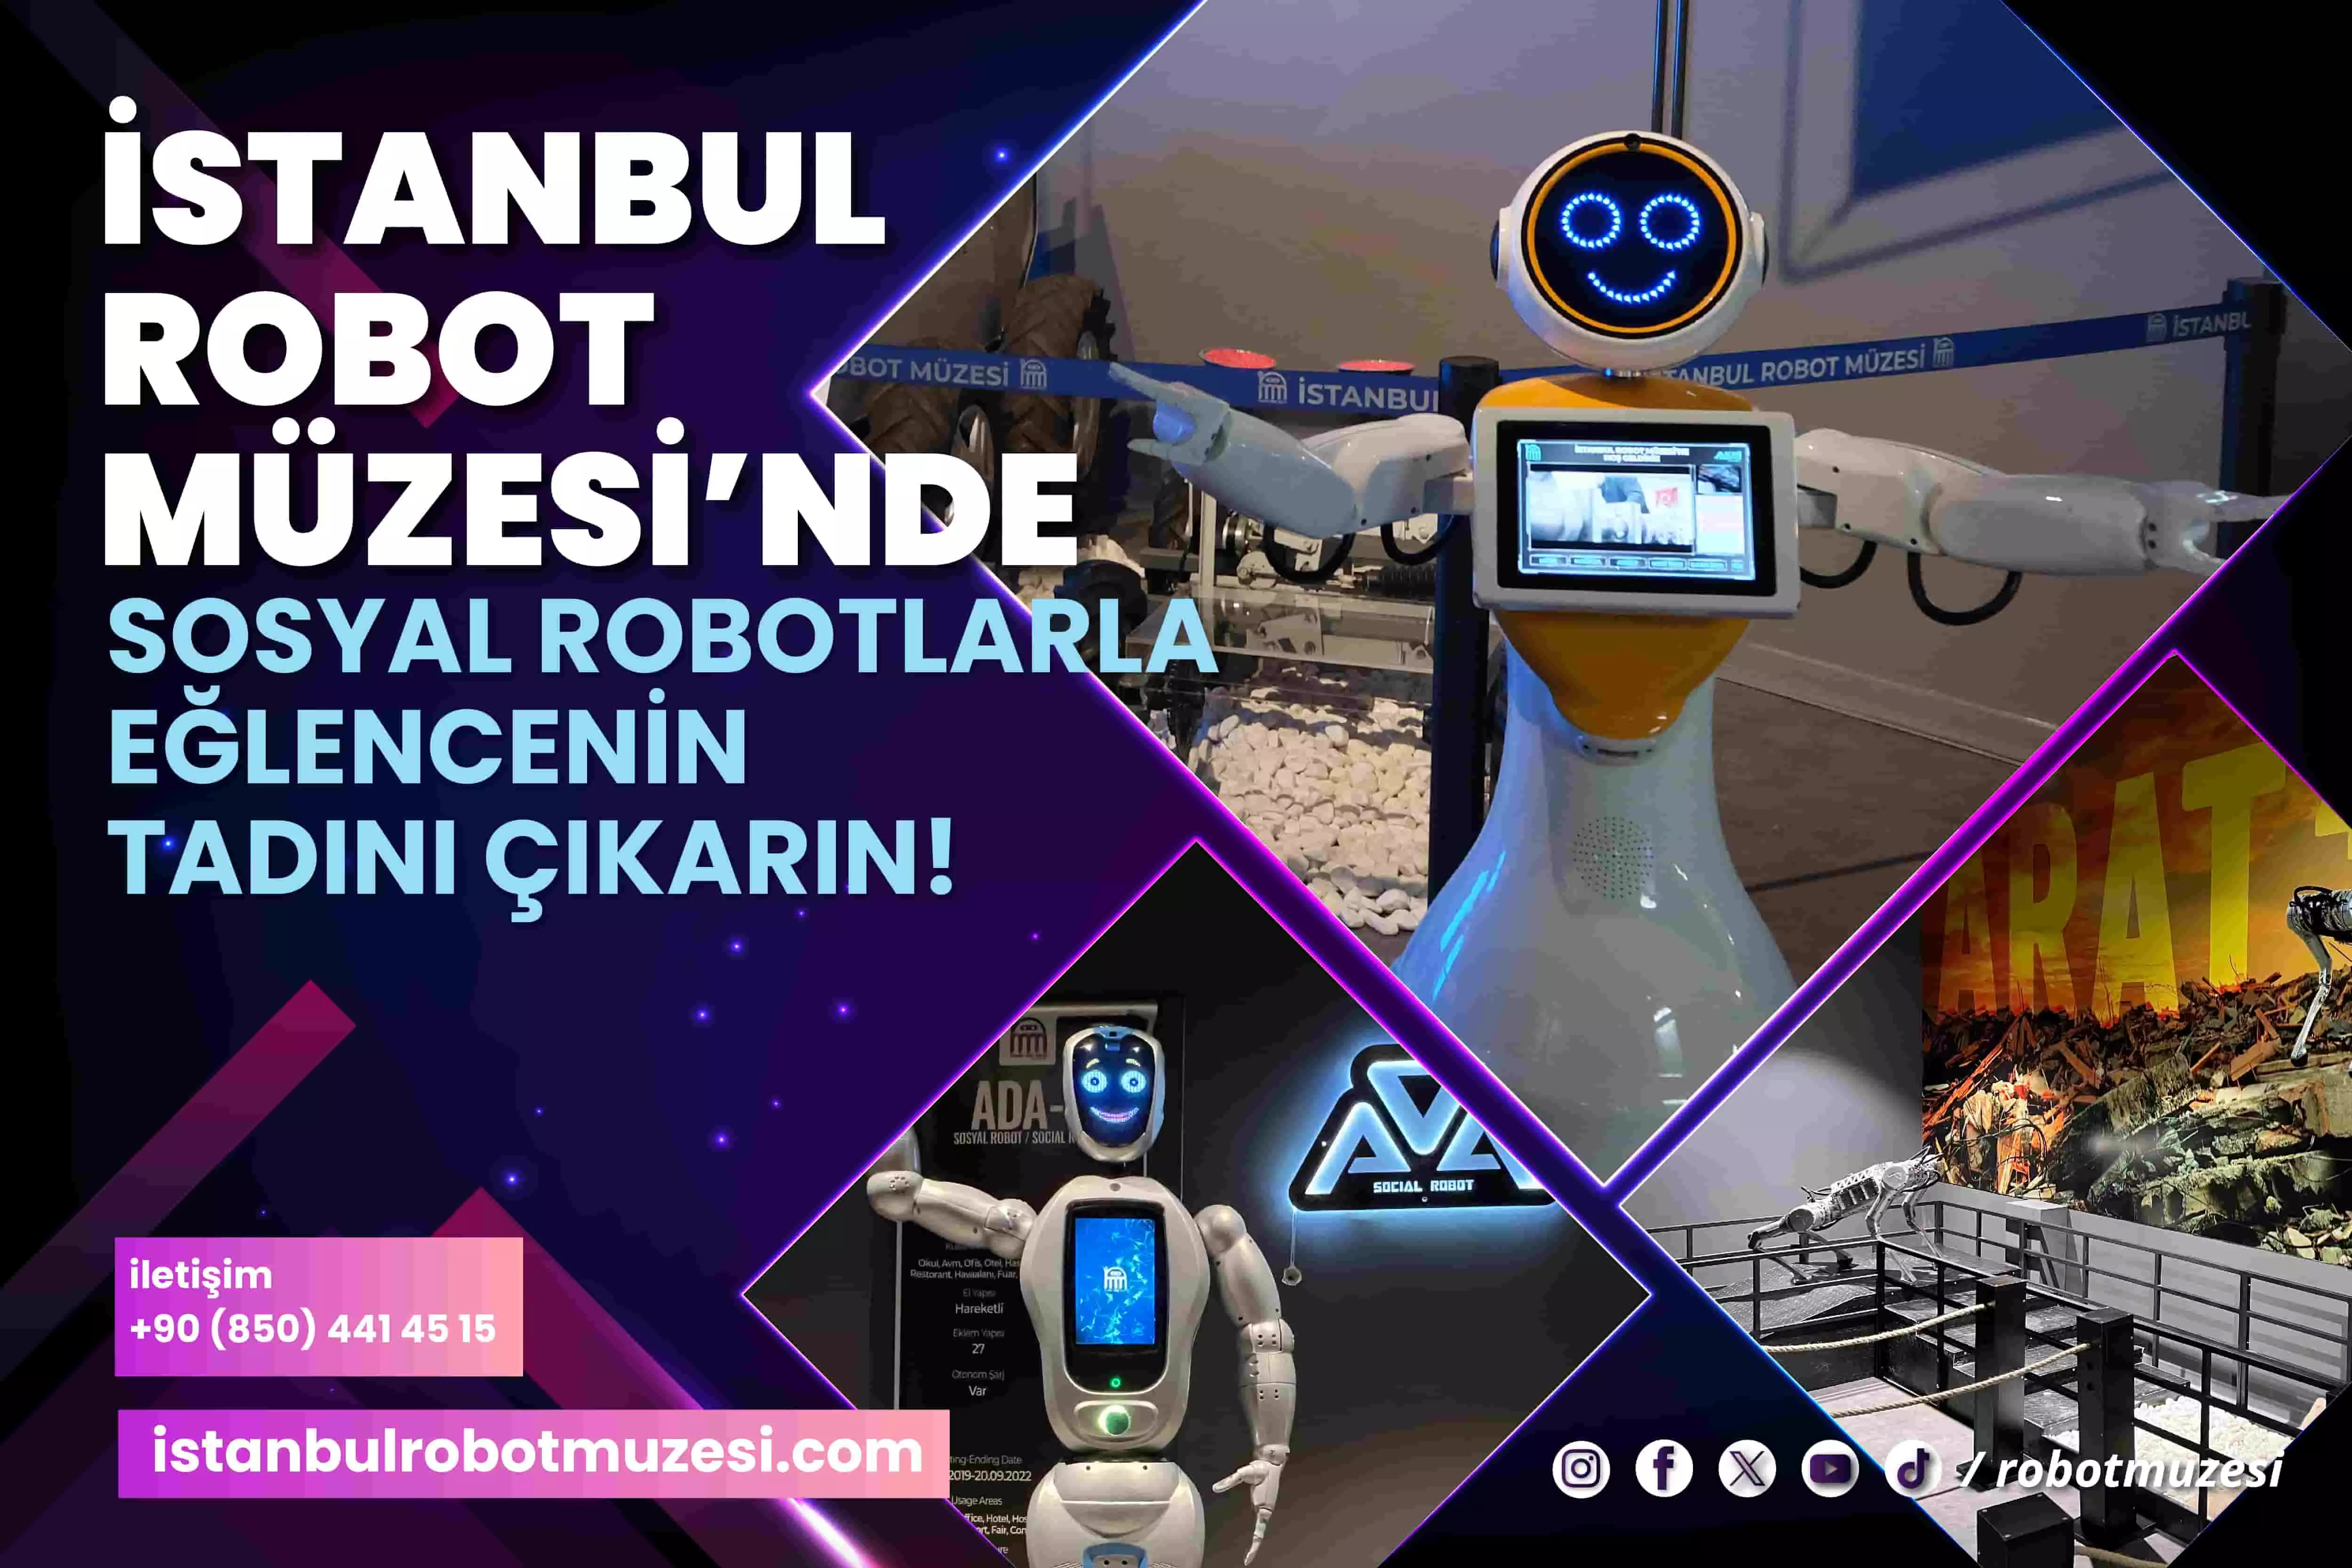 Istanbuler Robotermuseum Ticket – 7